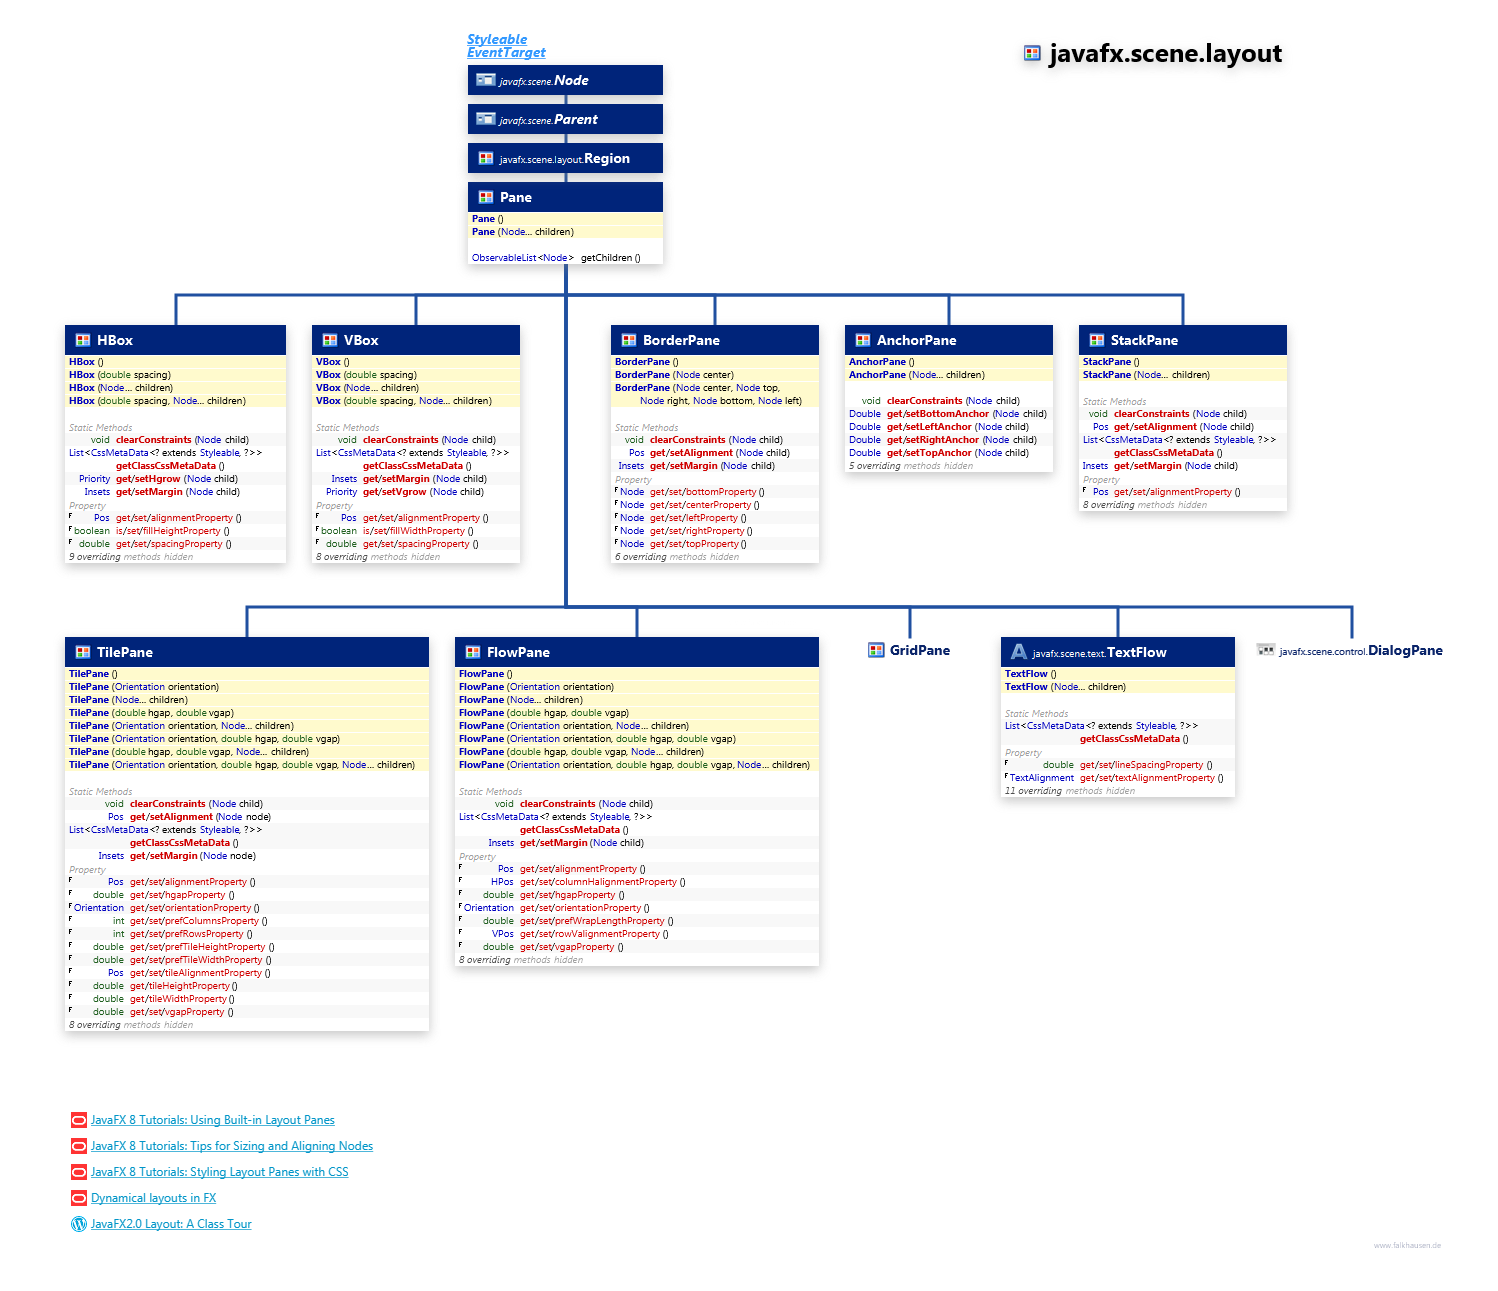 javafx.scene.layout Pane class diagram and api documentation for JavaFX 8